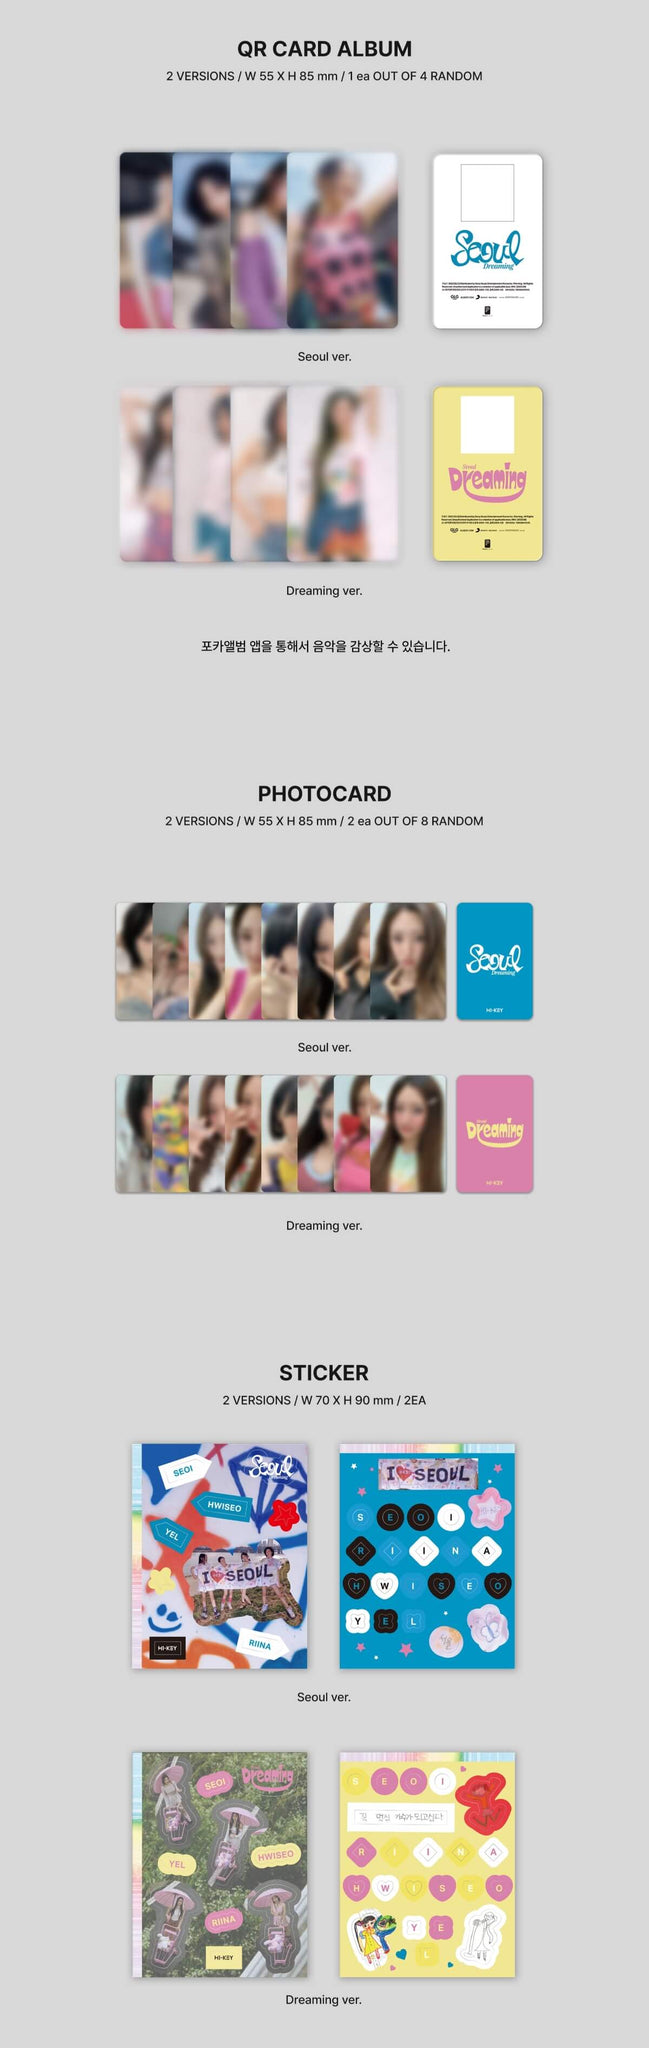 H1-KEY Seoul Dreaming POCA Version Inclusions QR Card Album Photocards Stickers